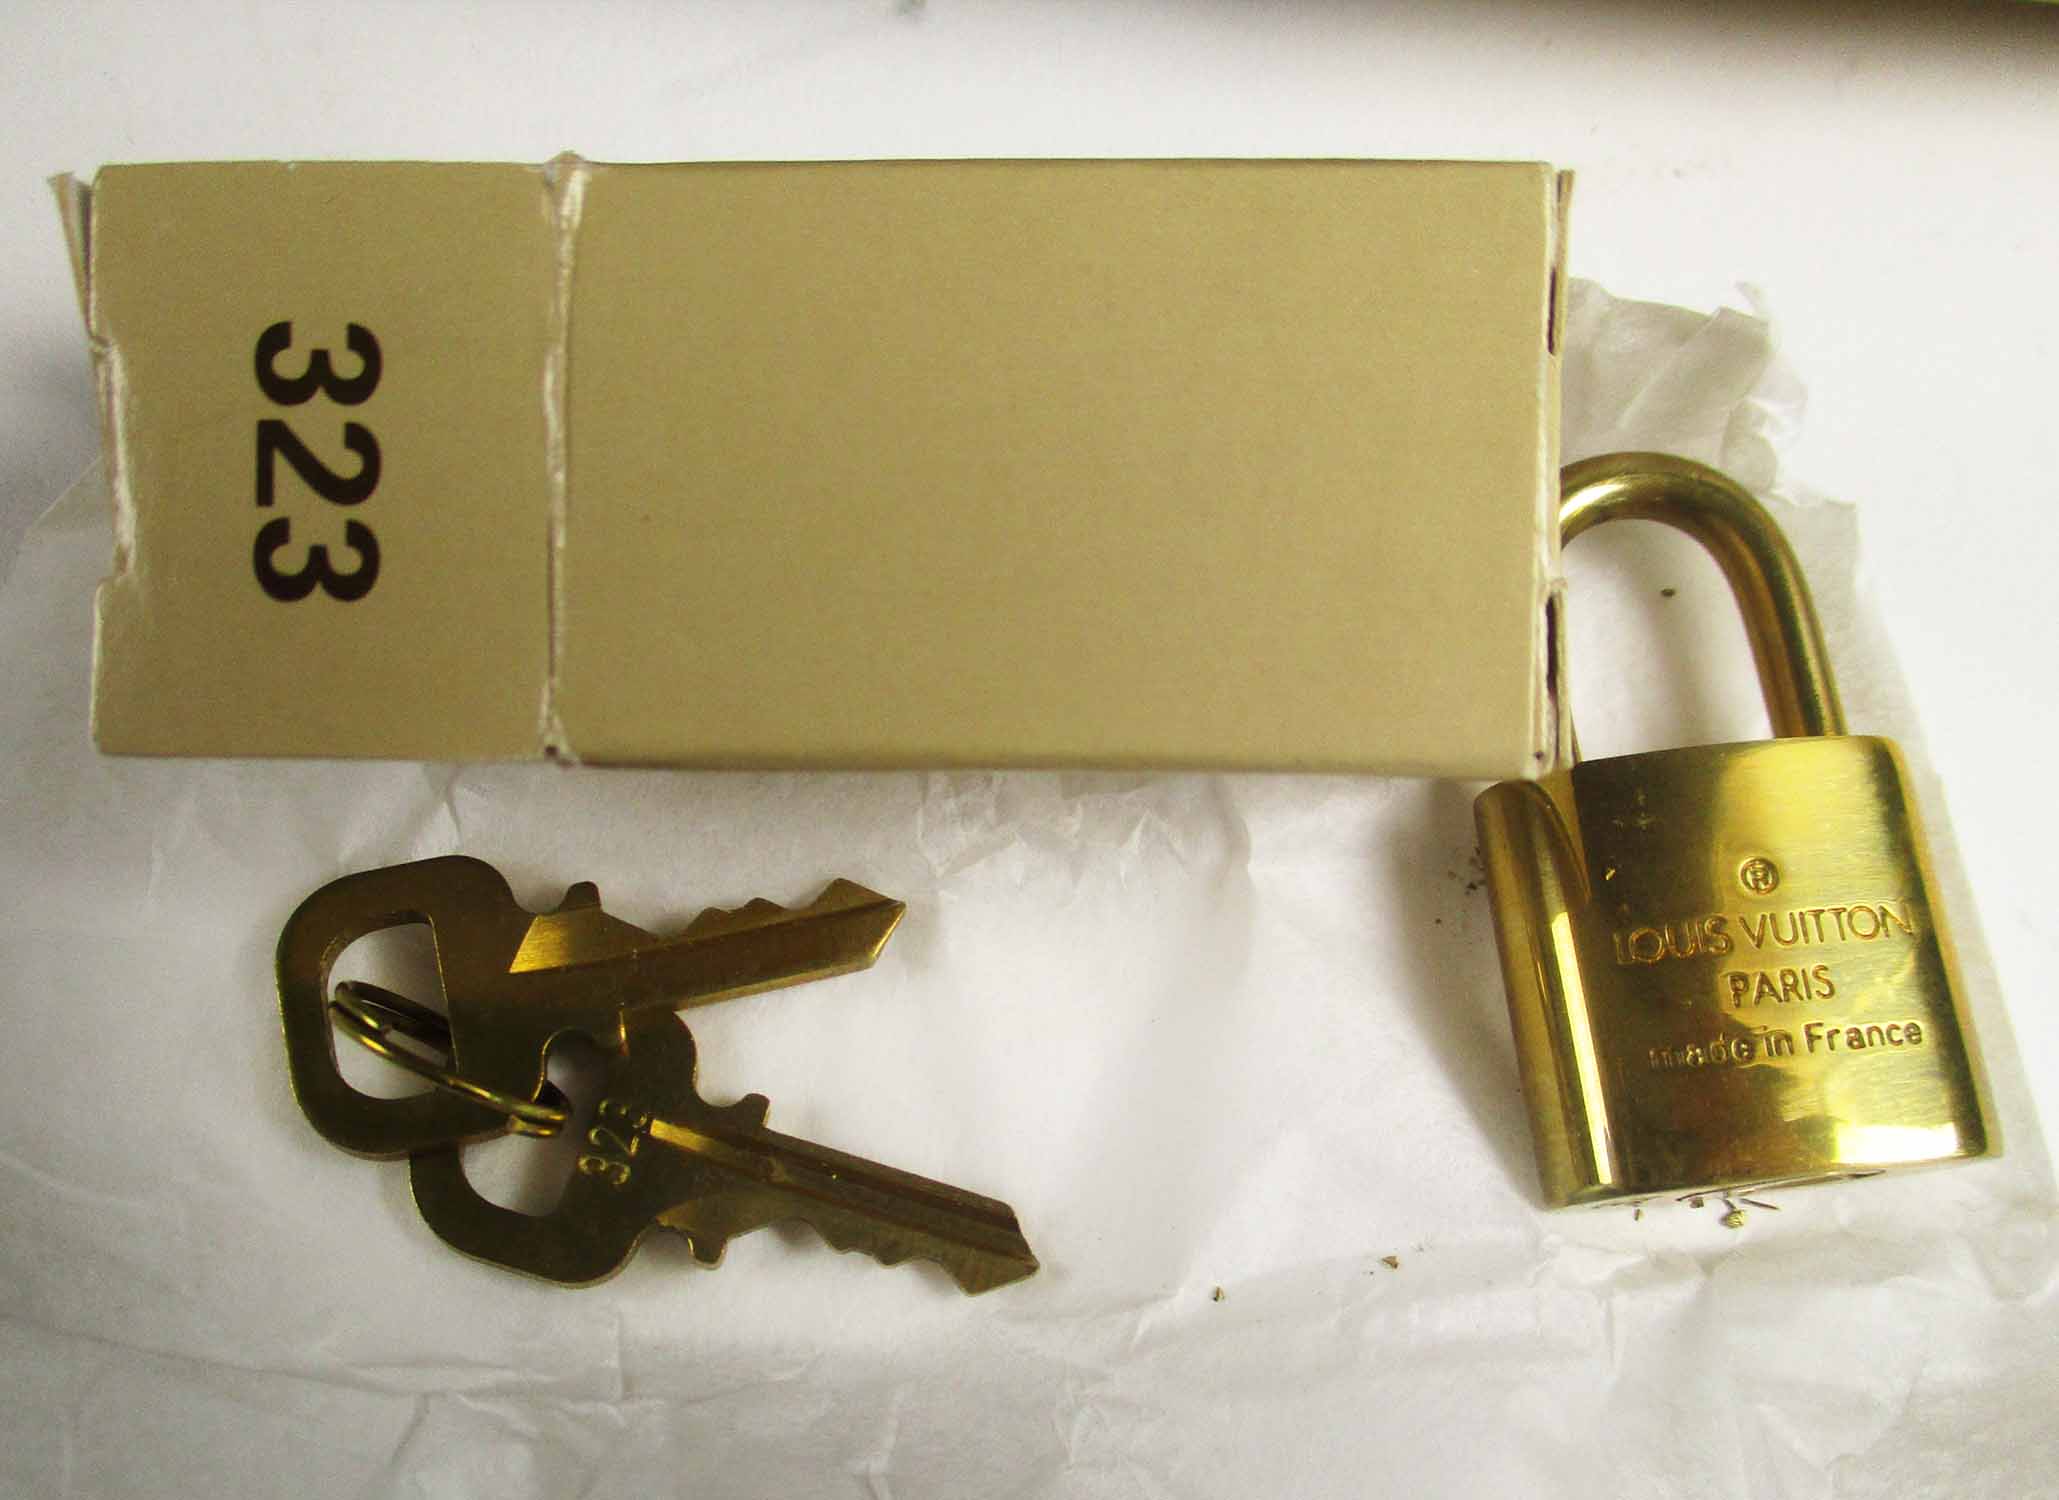 LOUIS VUITTON 'SIRIUS 70' MONOGRAM SUITCASE, plus padlock and keys, matches  lot no. 519. (owner's monogram)